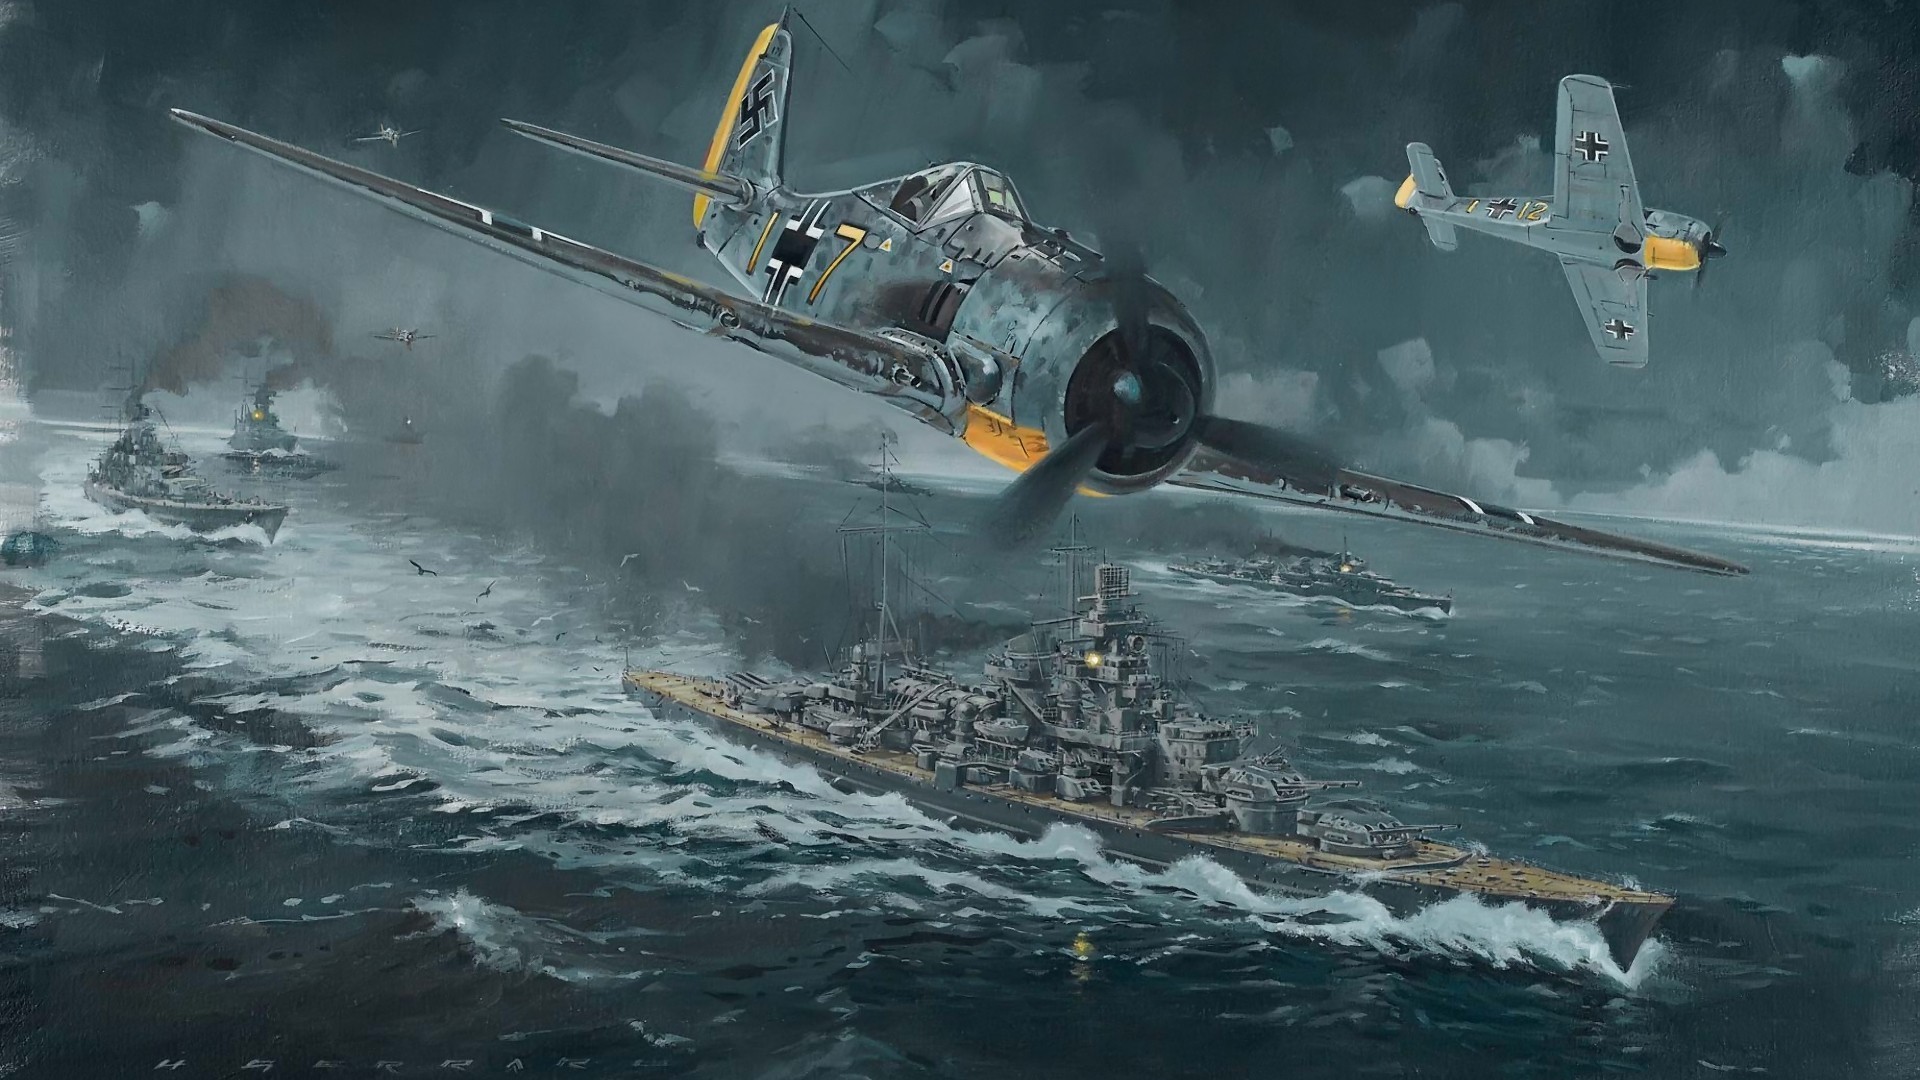 wwii-world-war-airplane-plane-drawing-battleship-fw-190-channel-dash-1942-operation-cerberus-hd-1080p-wallpaper